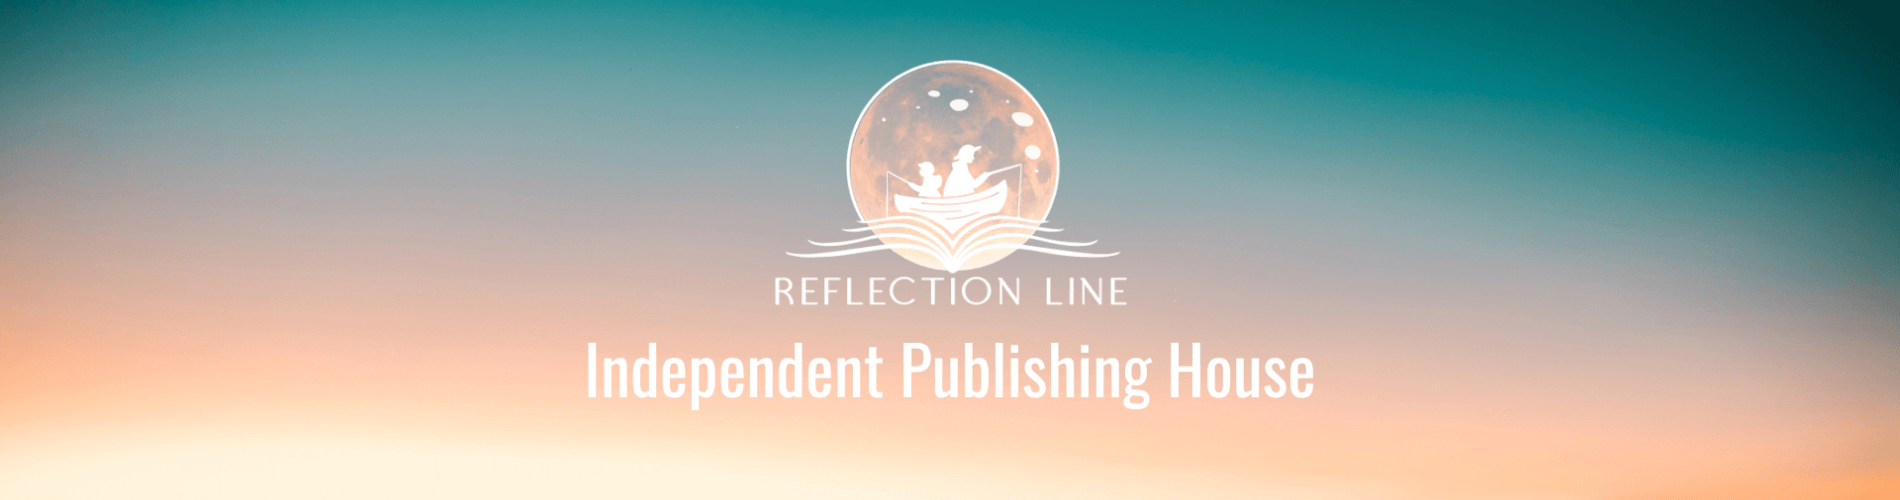 Reflection Line - Independent Publishing House